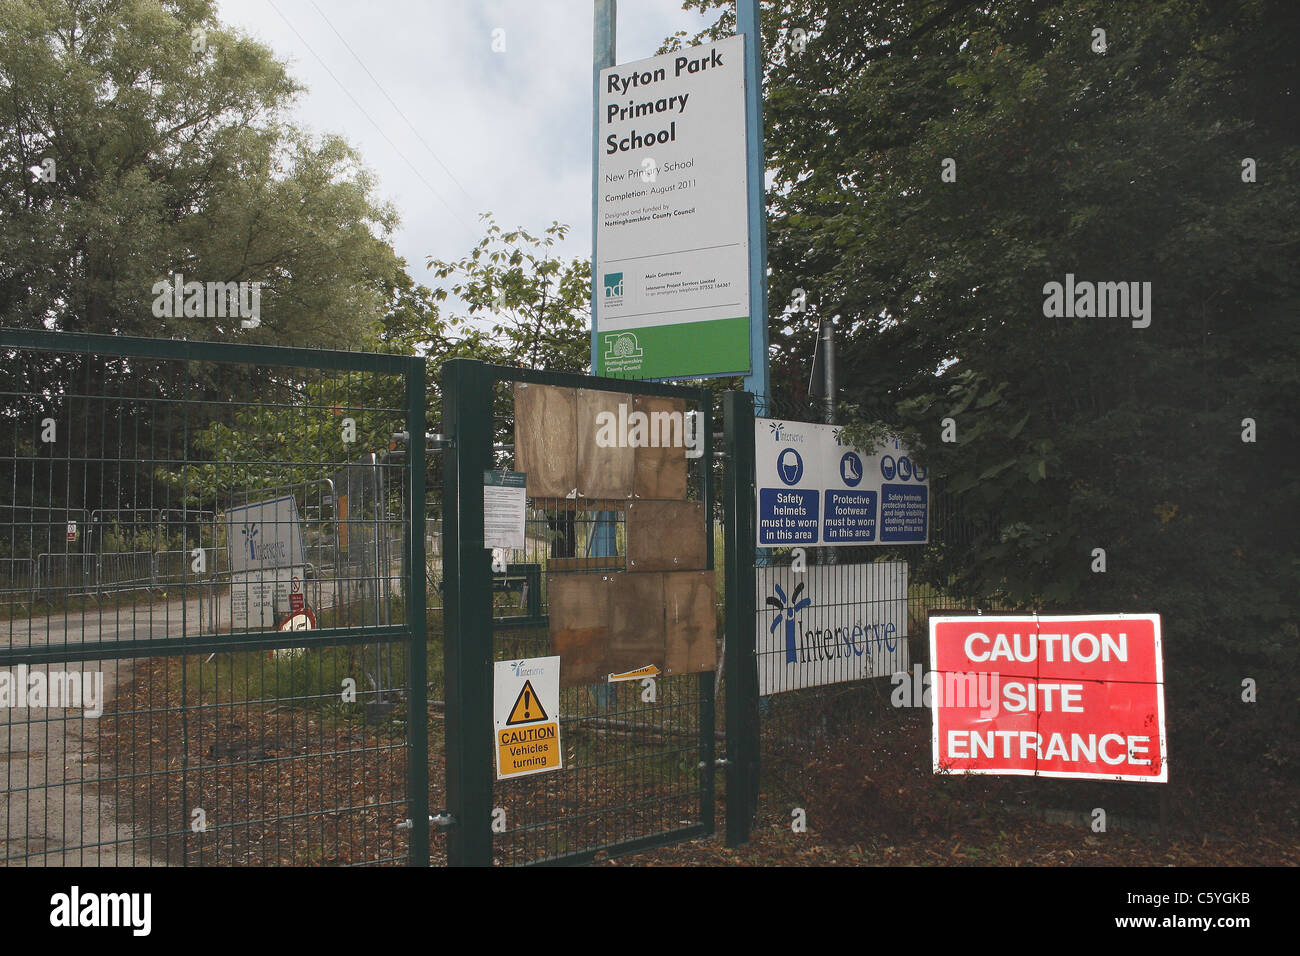 Ryton Park Primary School, bulding site entrance, Worksop, Notts, England Stock Photo